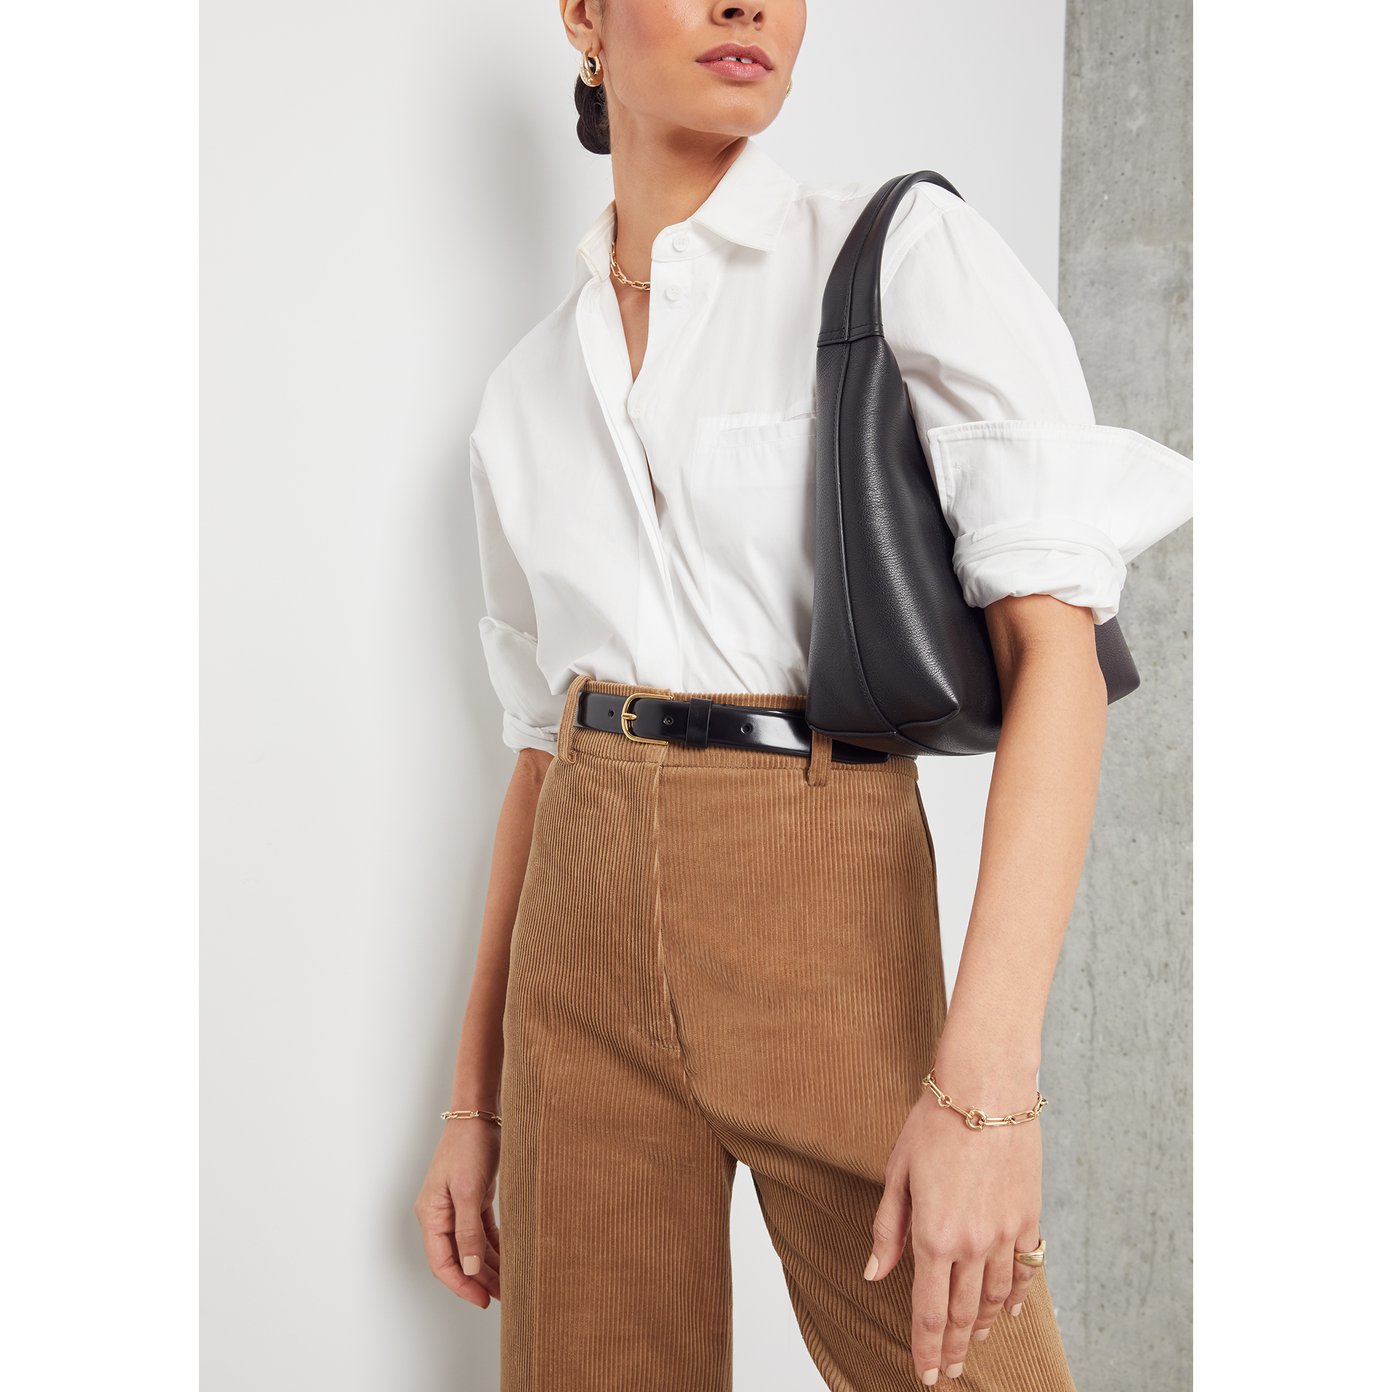 Women's Belts Ladies Fashion Skinny Soft Dress Casual Leather